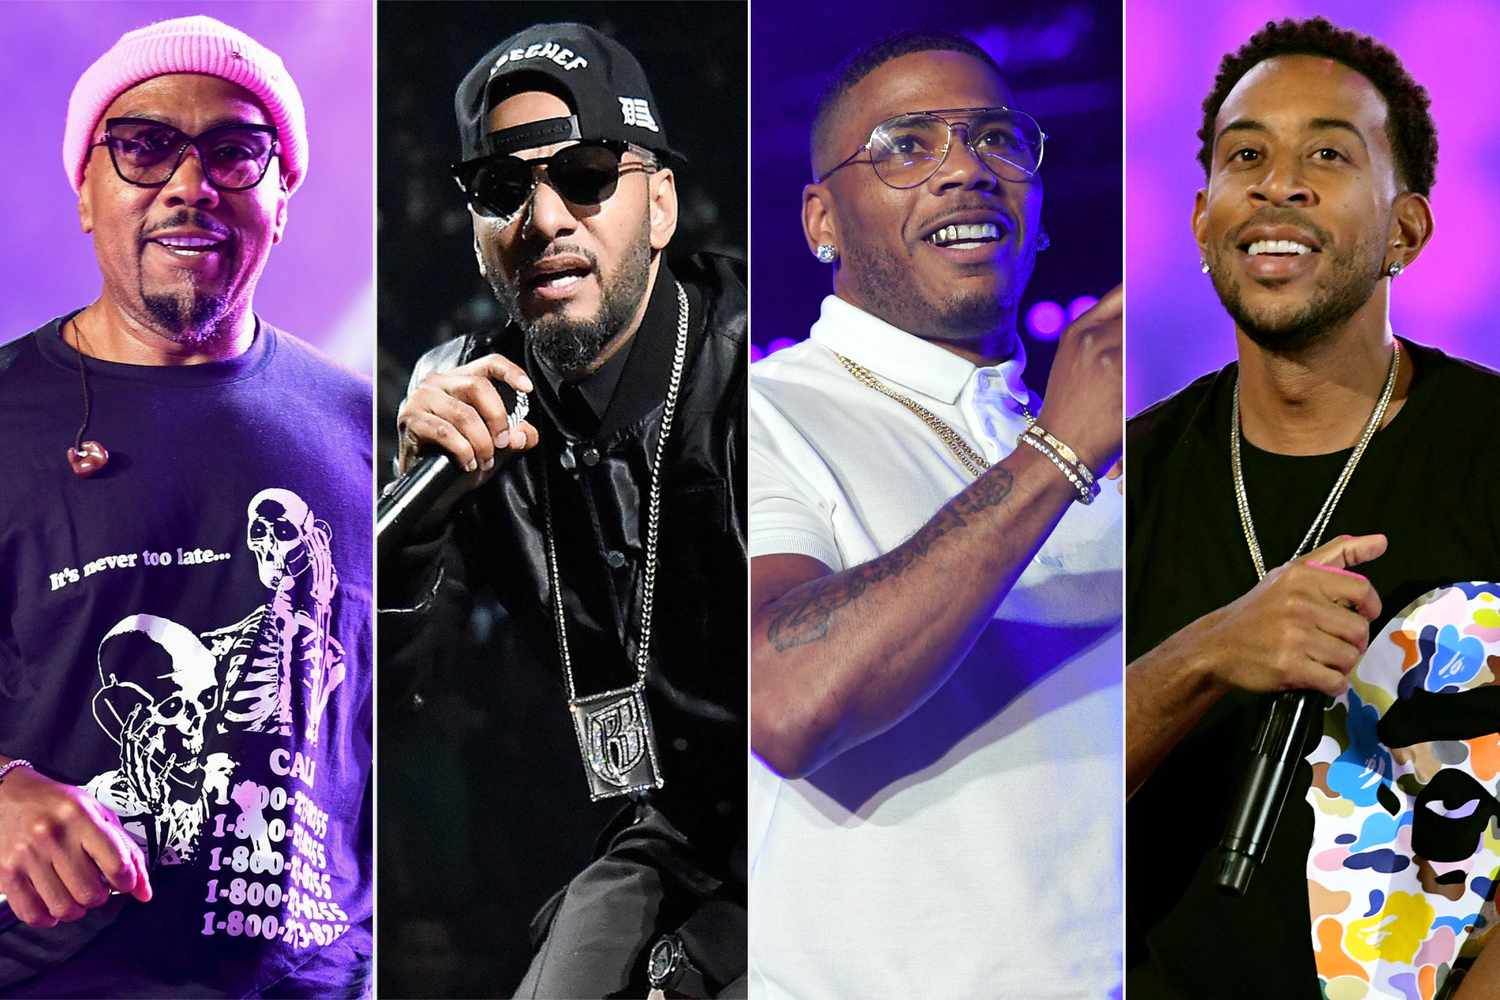 Timbaland, Swizz Beatz, Nelly, Ludacris